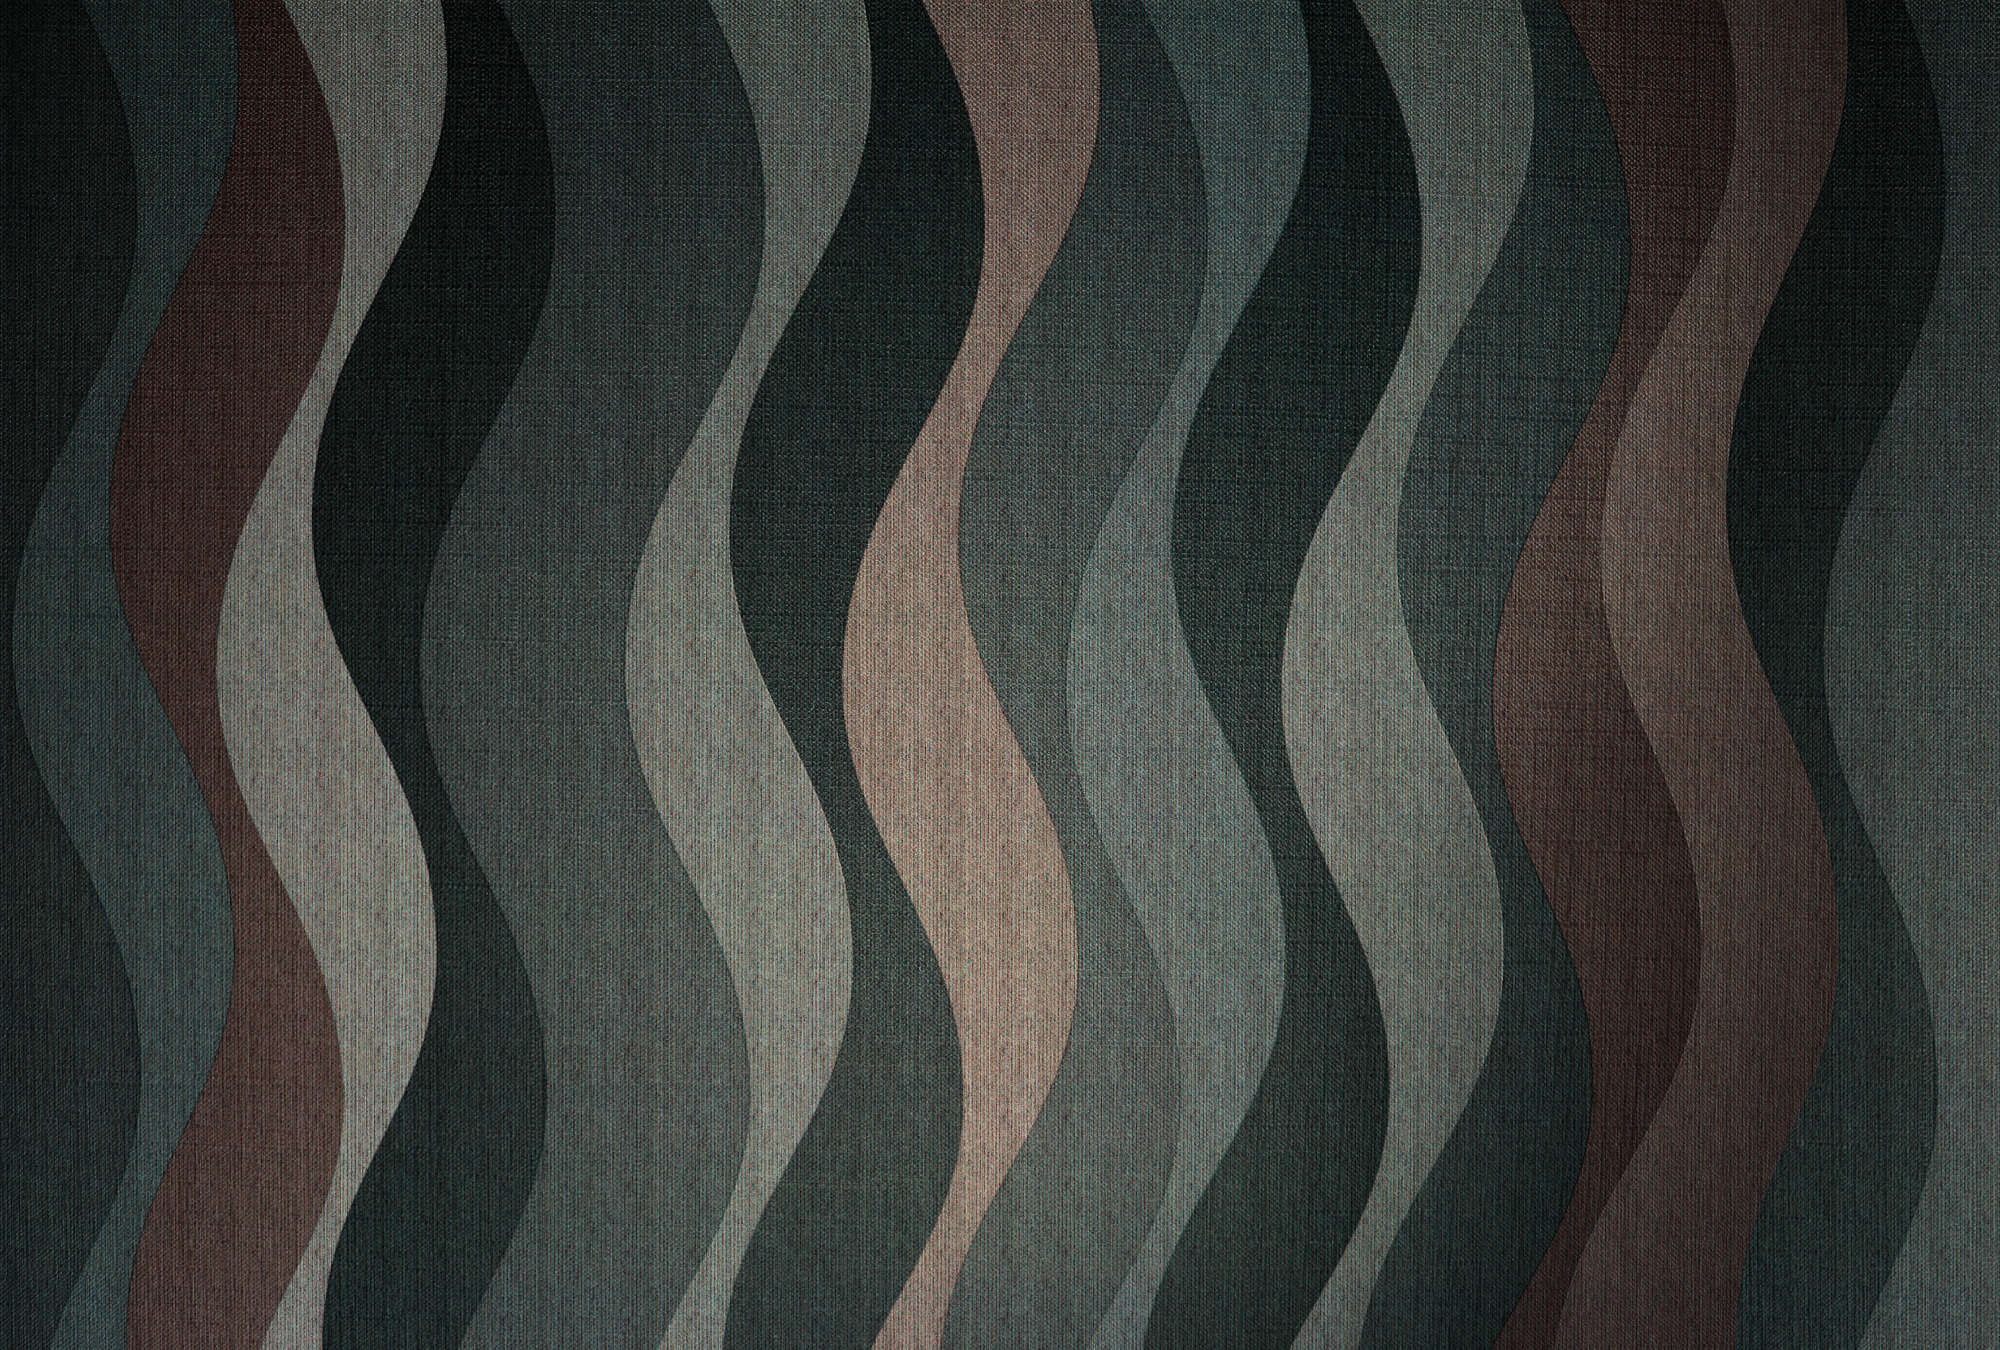             Savoy 1 - Dark wall mural retro graphic waves pattern
        